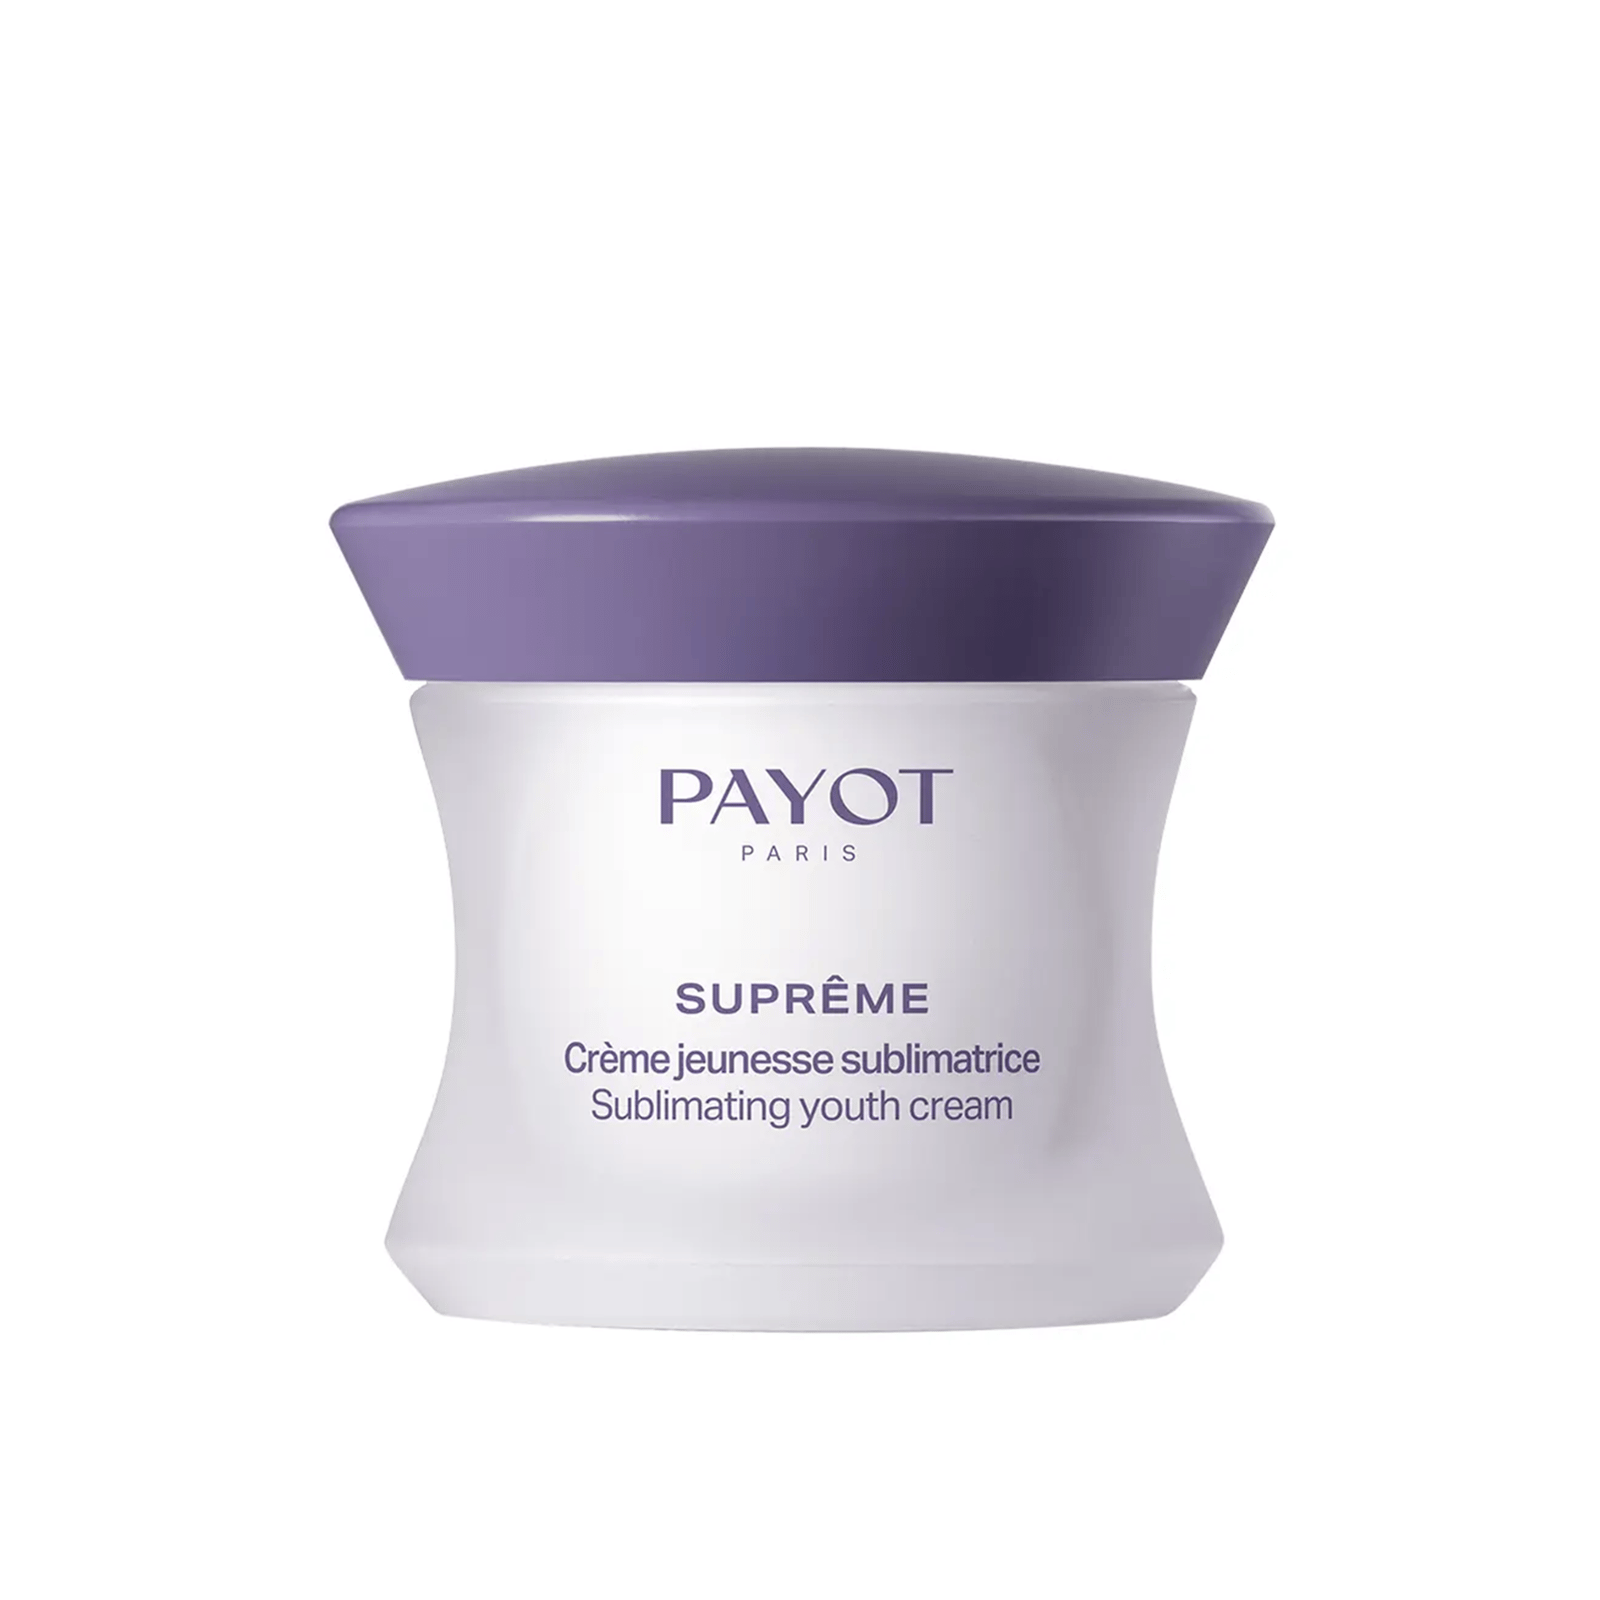 Payot Suprême Sublimating Youth Cream 50ml (1.6floz)